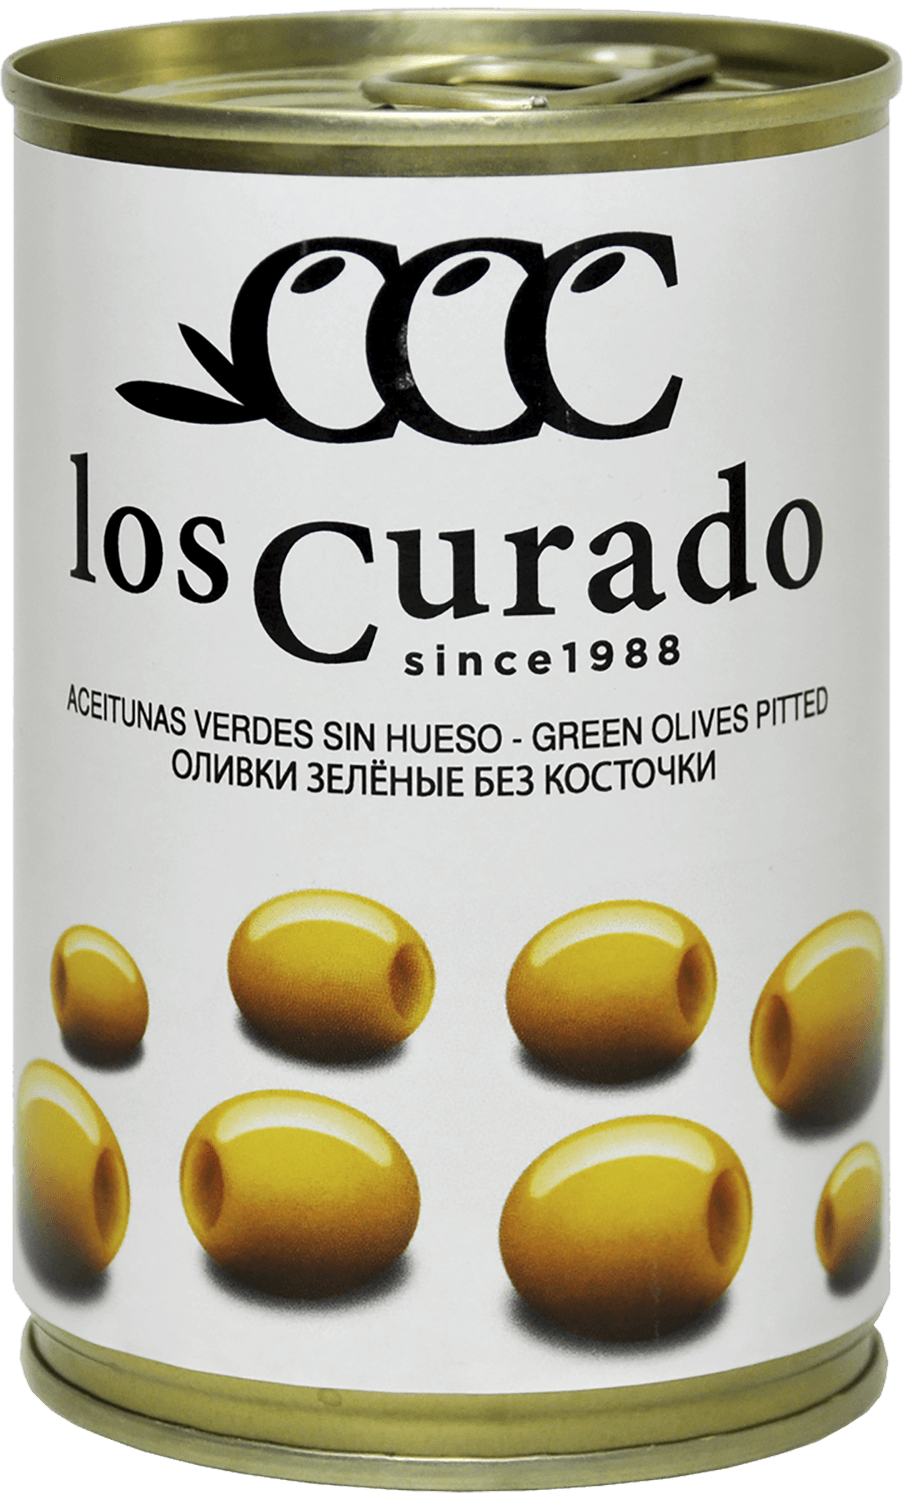 Green olives pitted Los Curado цена и фото